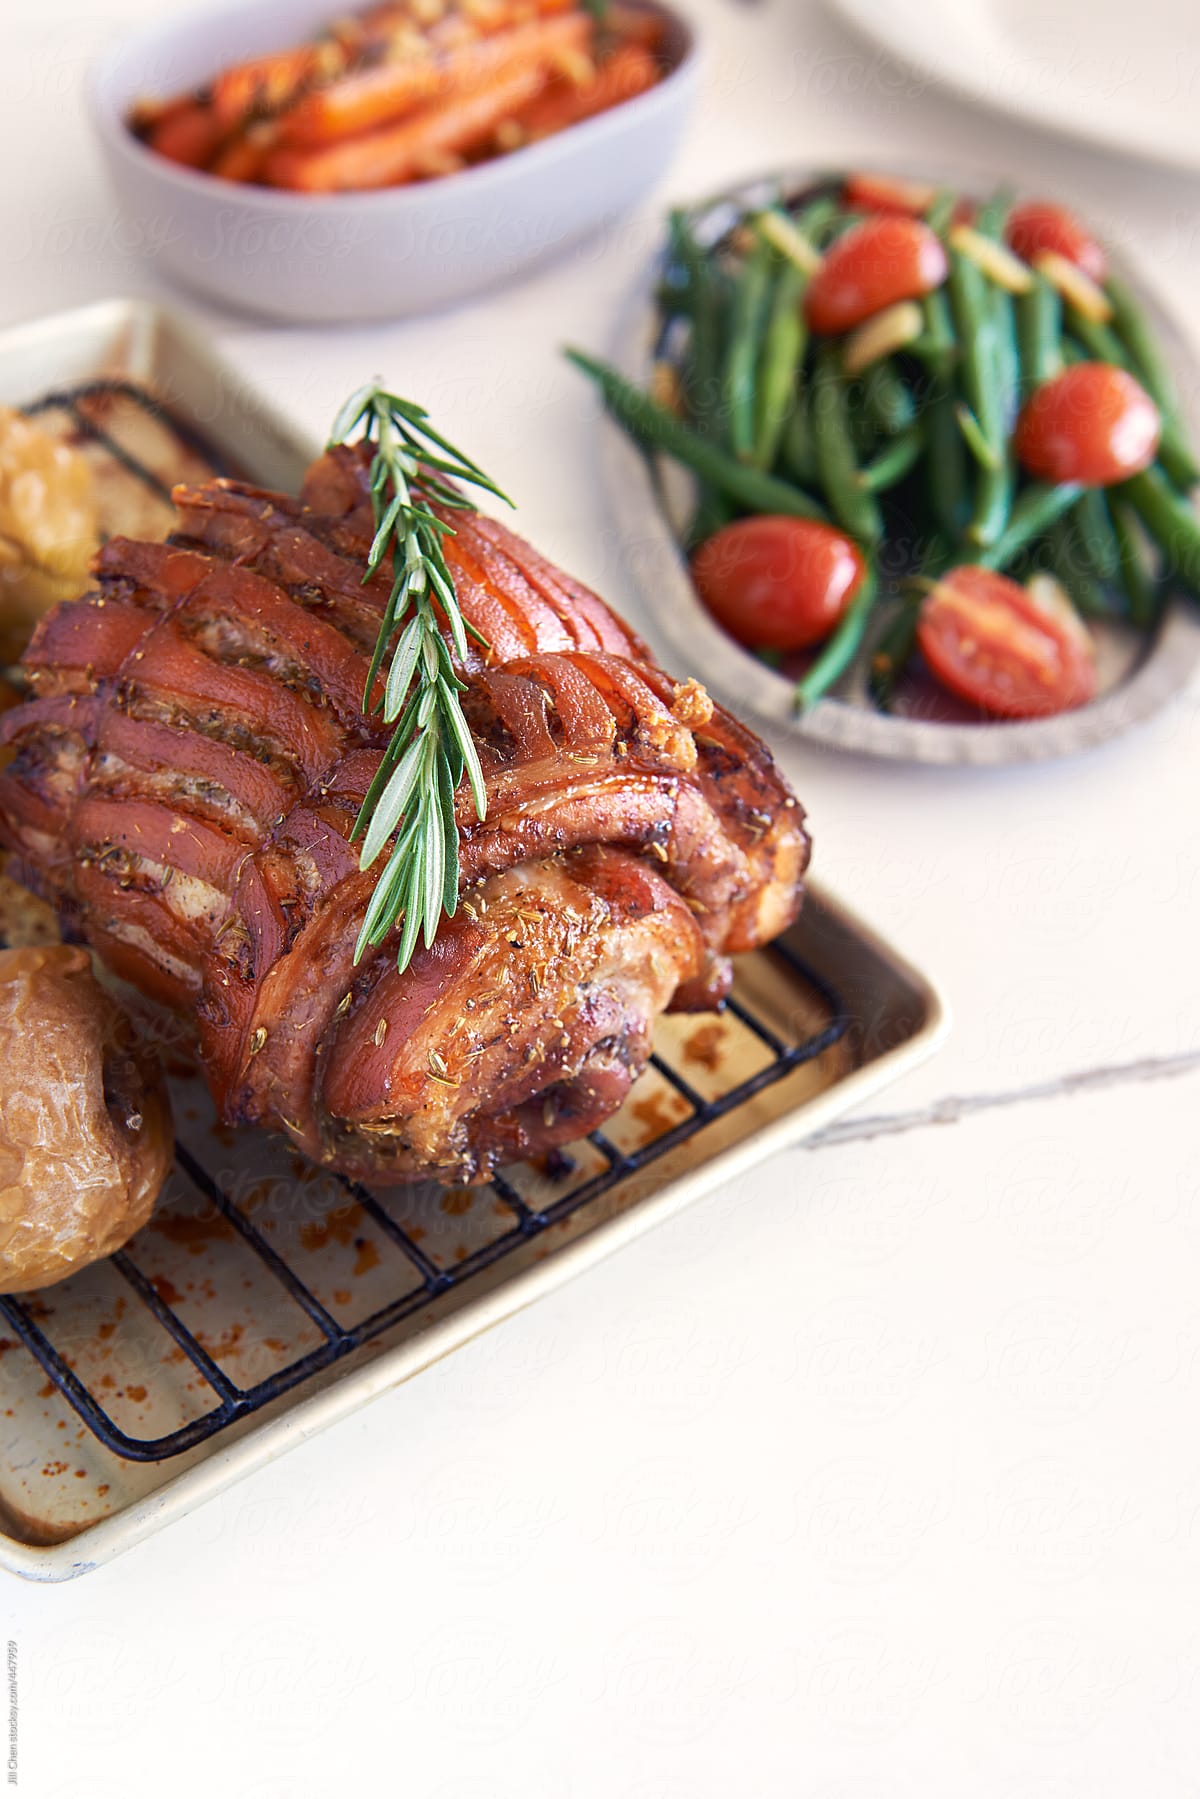 Pork roast with scored skin crackling